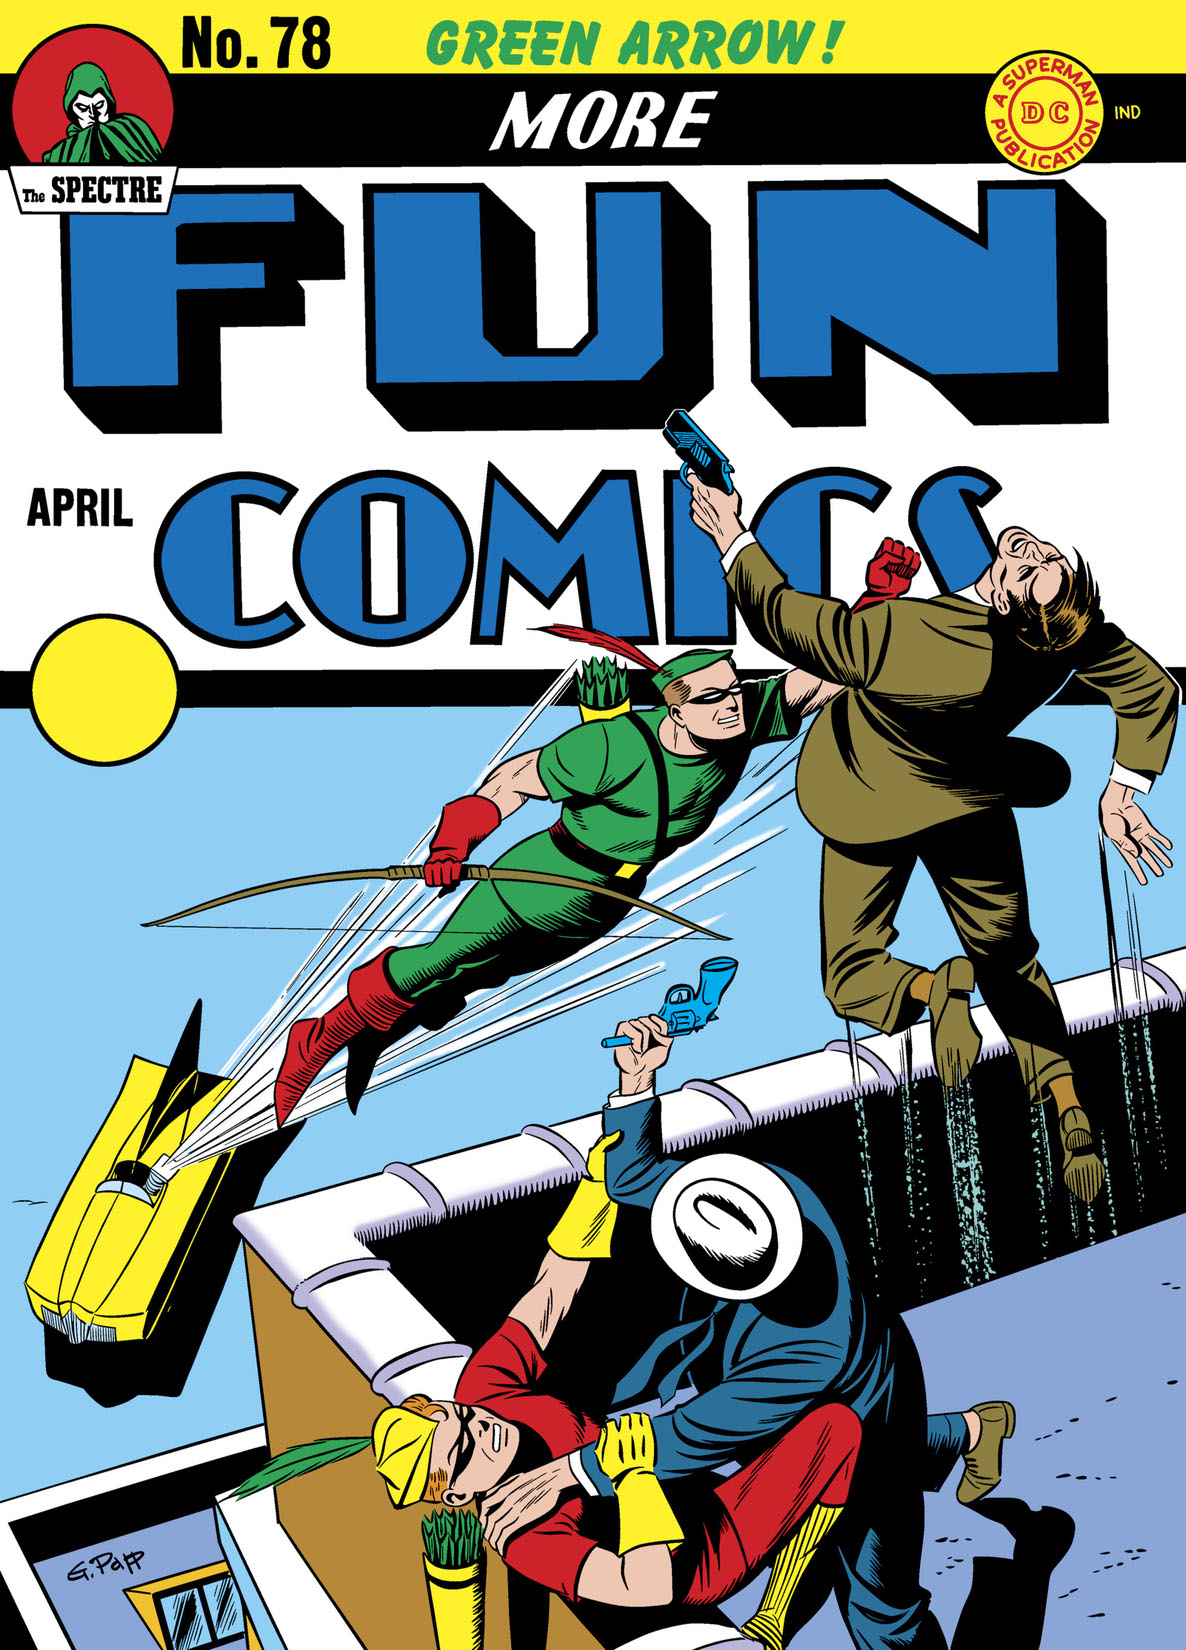 More Fun Comics #78 preview images